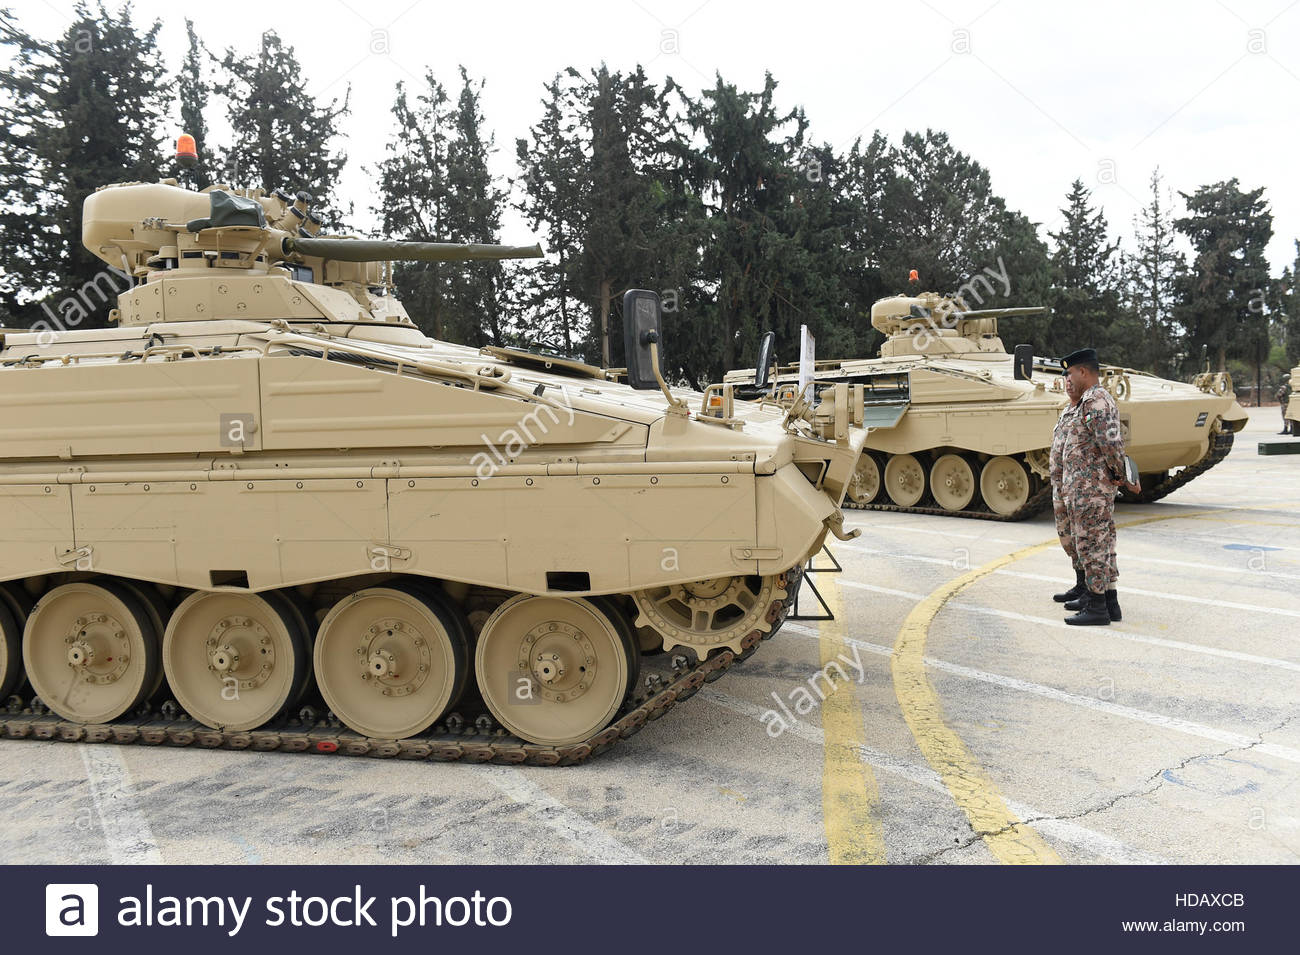 ammam-jordan-11th-dec-2016-tanks-of-the-marder-model-are-being-ceremoniously-HDAXCB.jpg